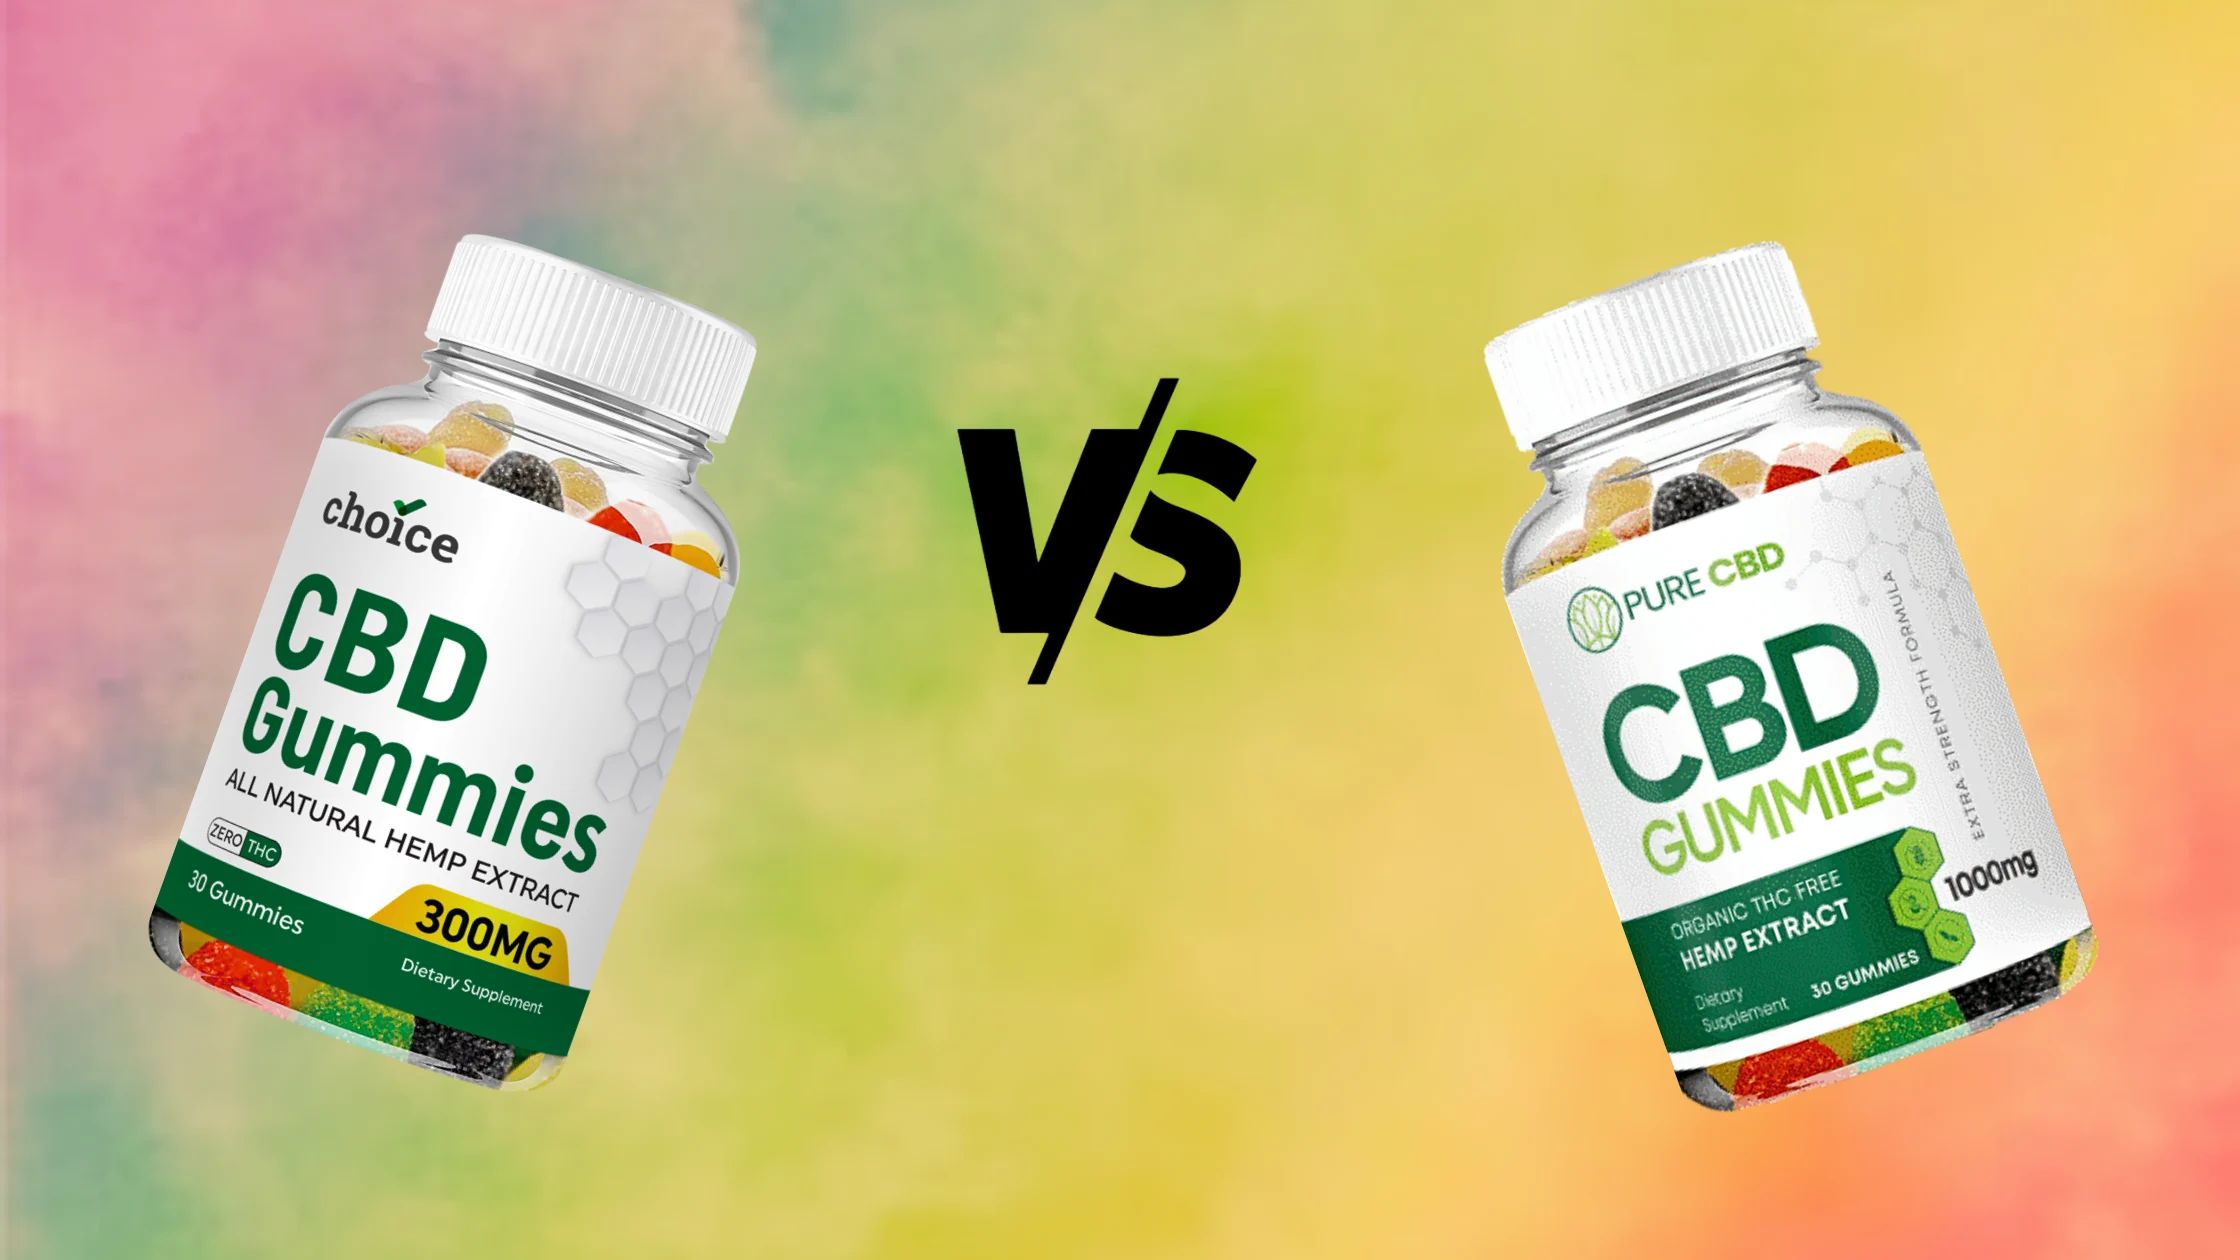 Choice CBD Gummies vs Pure CBD Gummies